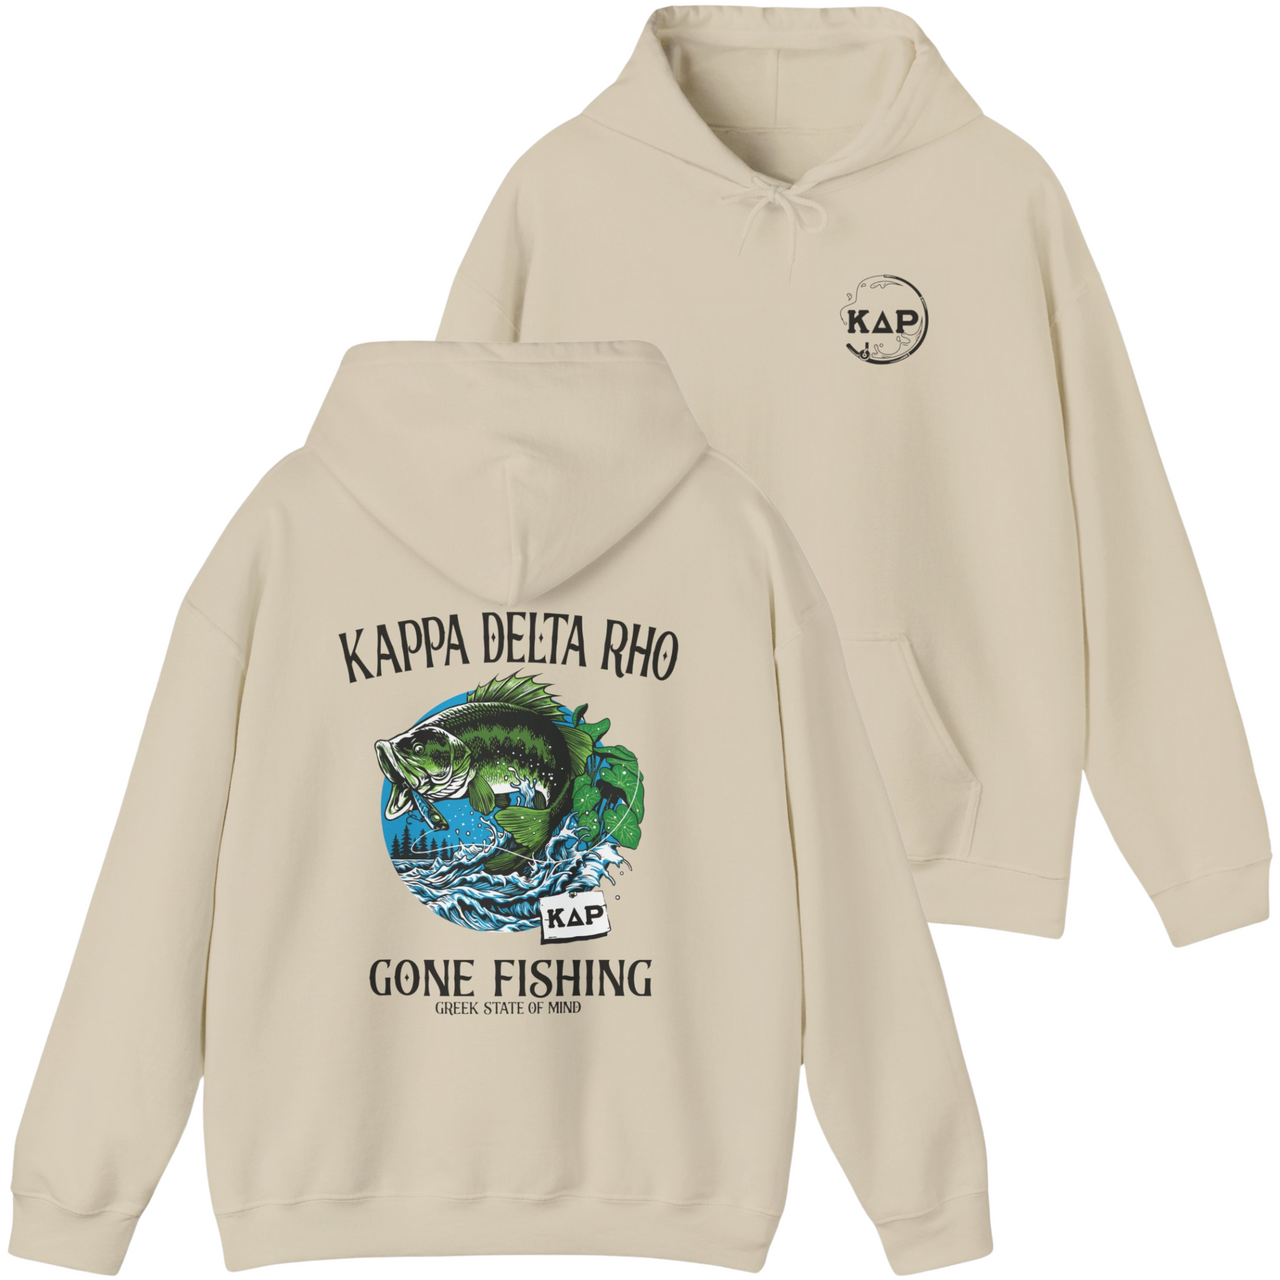 Kappa Delta Rho Graphic Hoodie | Gone Fishing